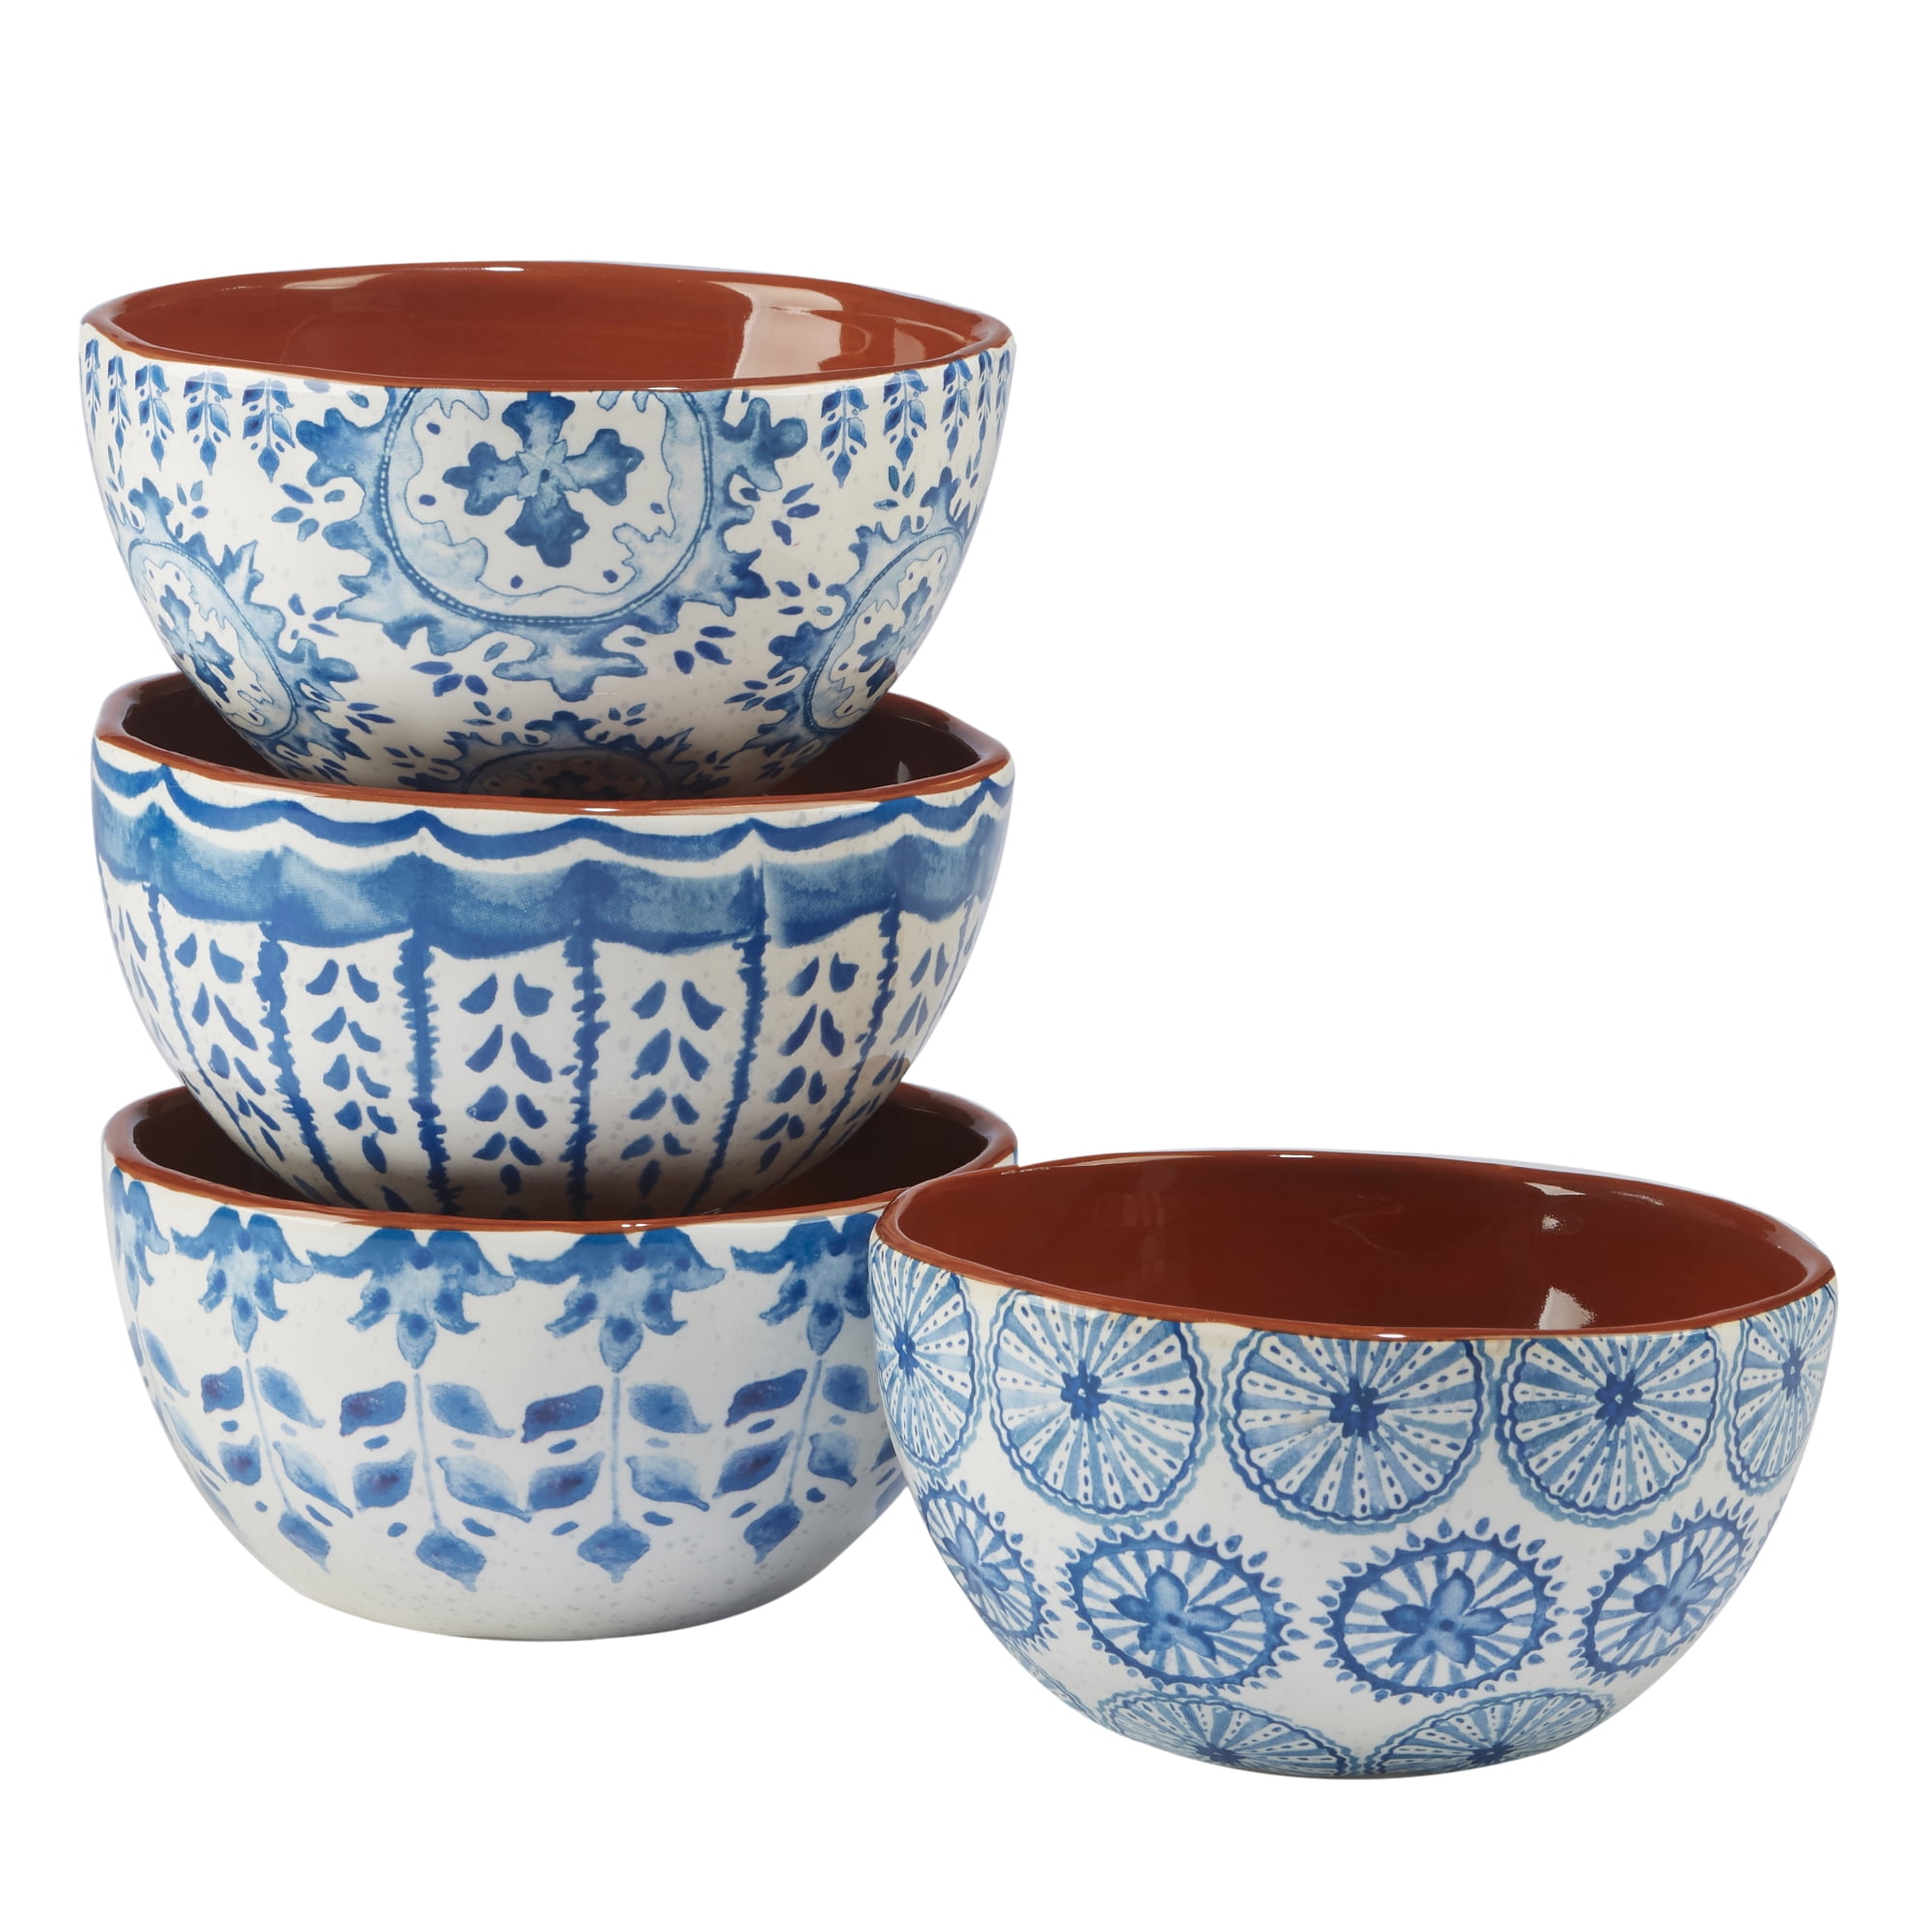 31623 from Japan Saikai Touki Saikai Pottery Traiditional Japanese Rice Bowls 5 Bowls Set Four Pack 